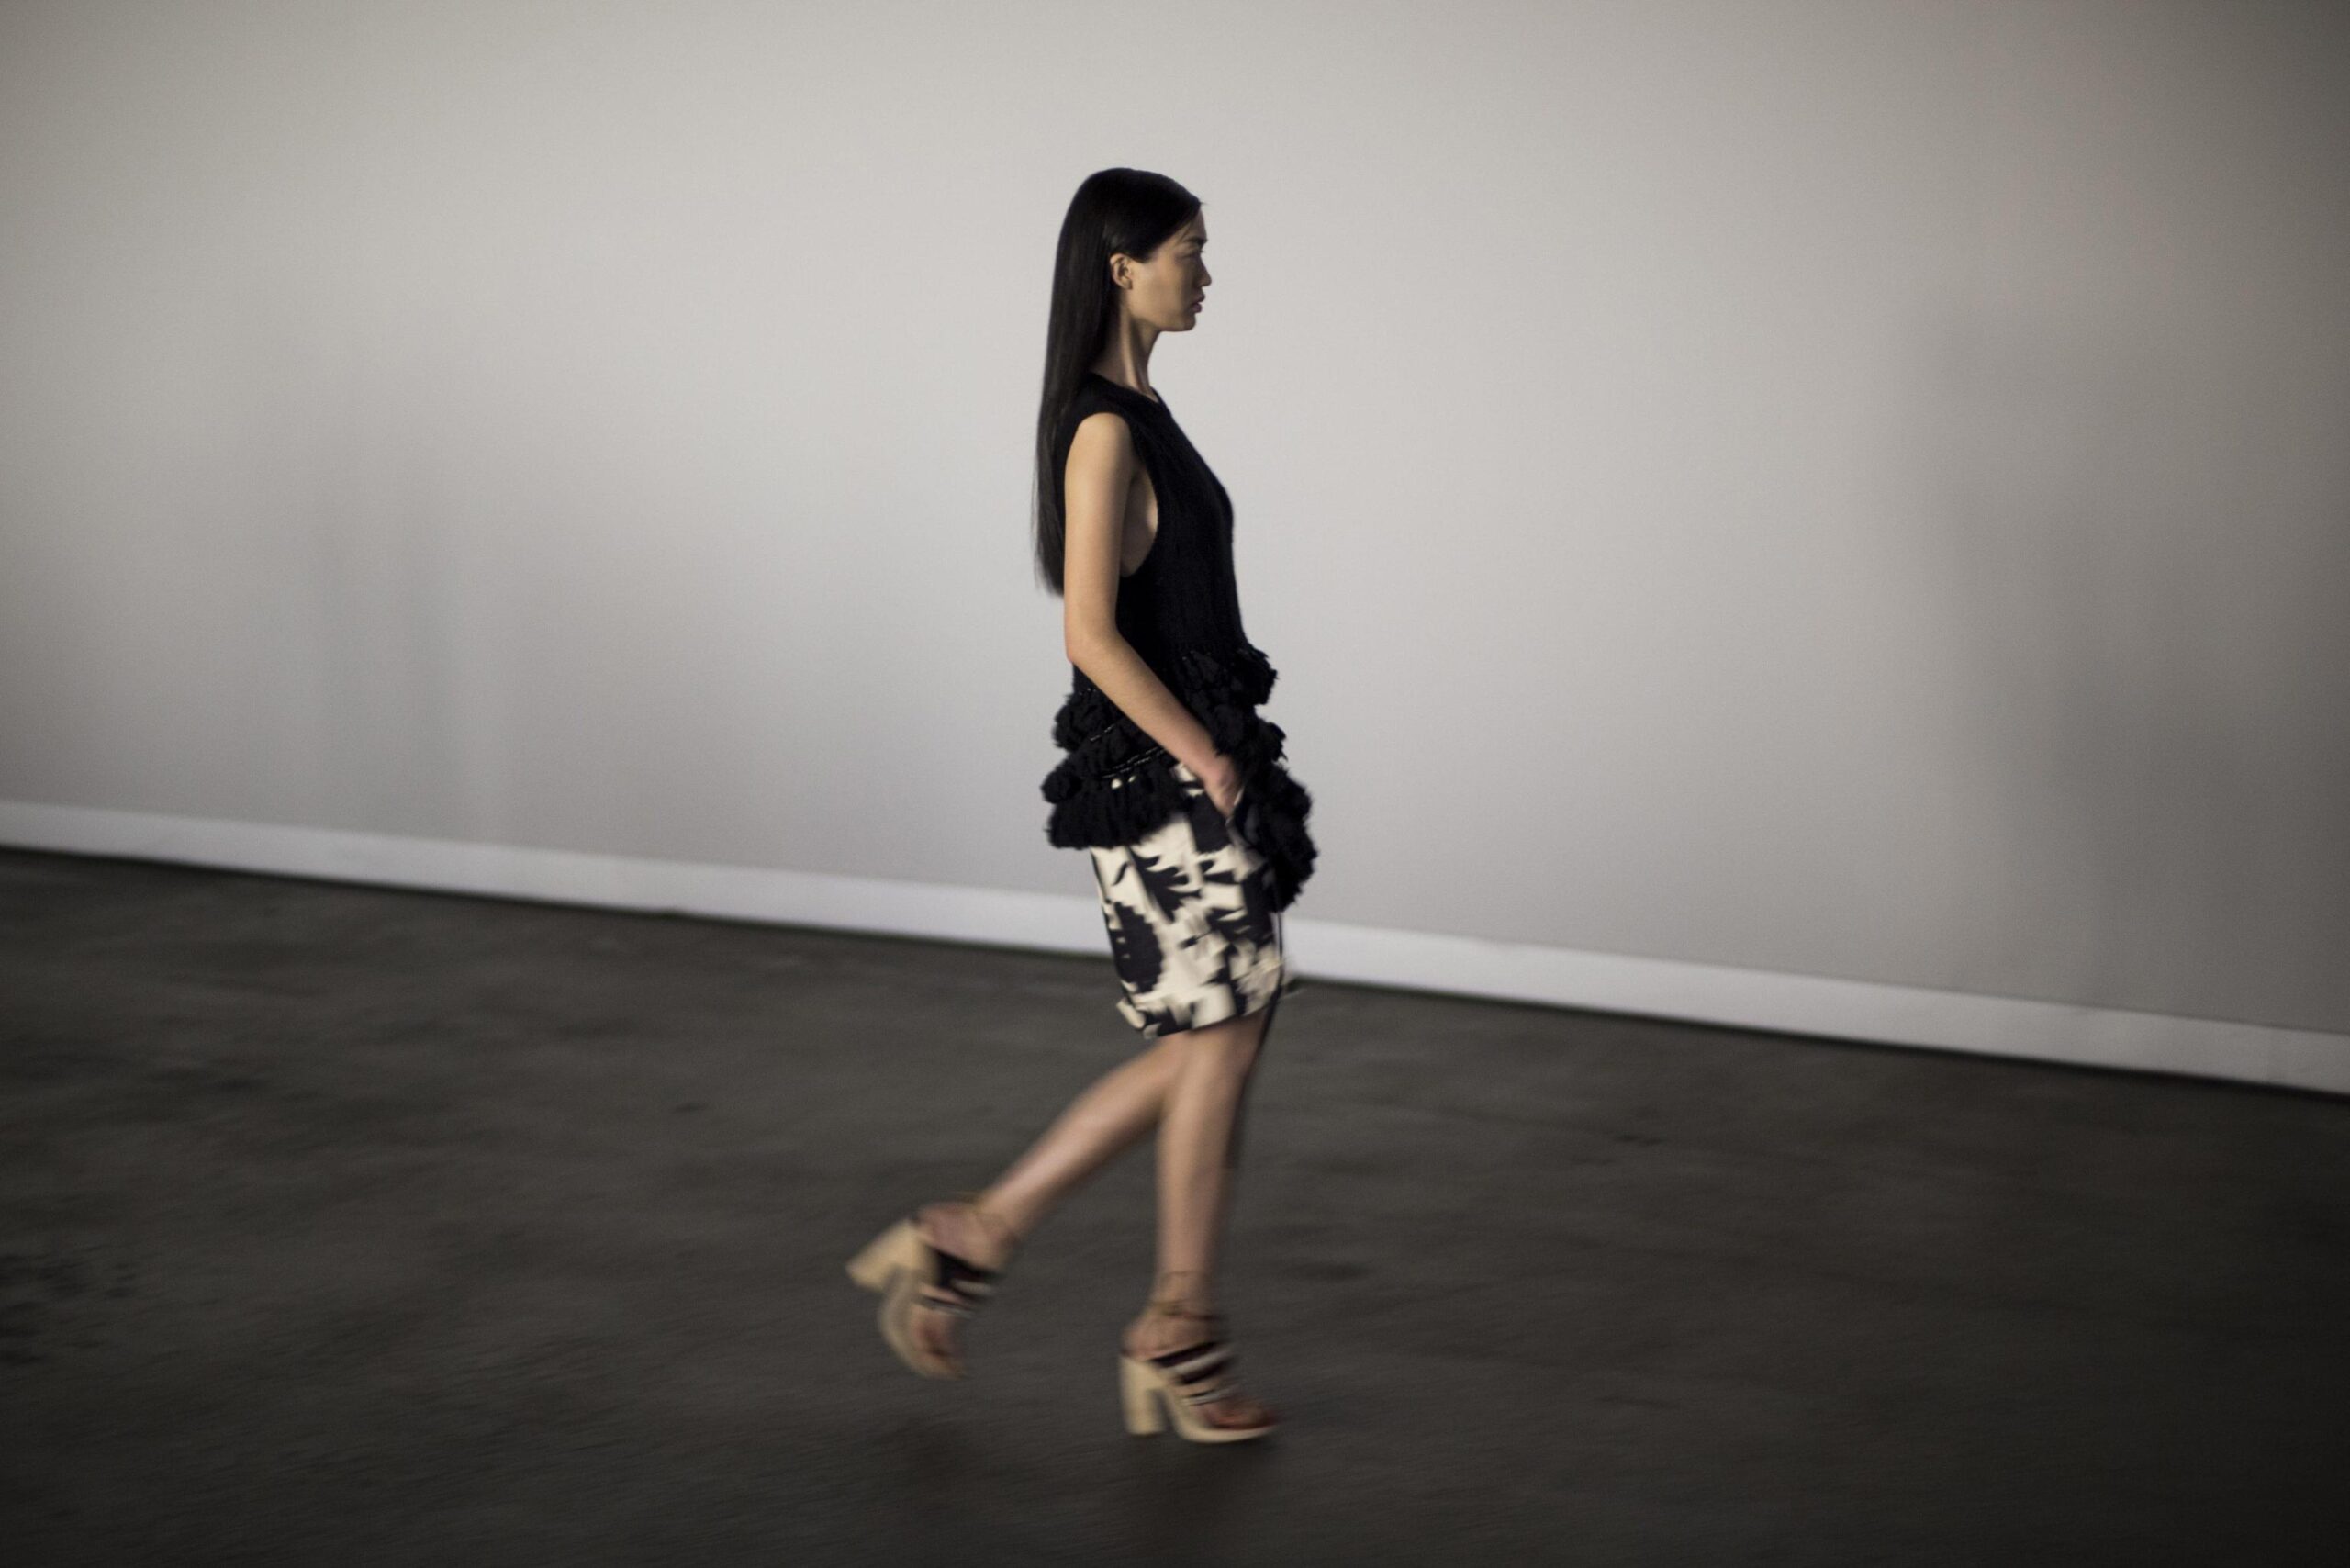 Fotoracconto sulla vita di Qiwen Feng, la modella della Paris Fashion Week07